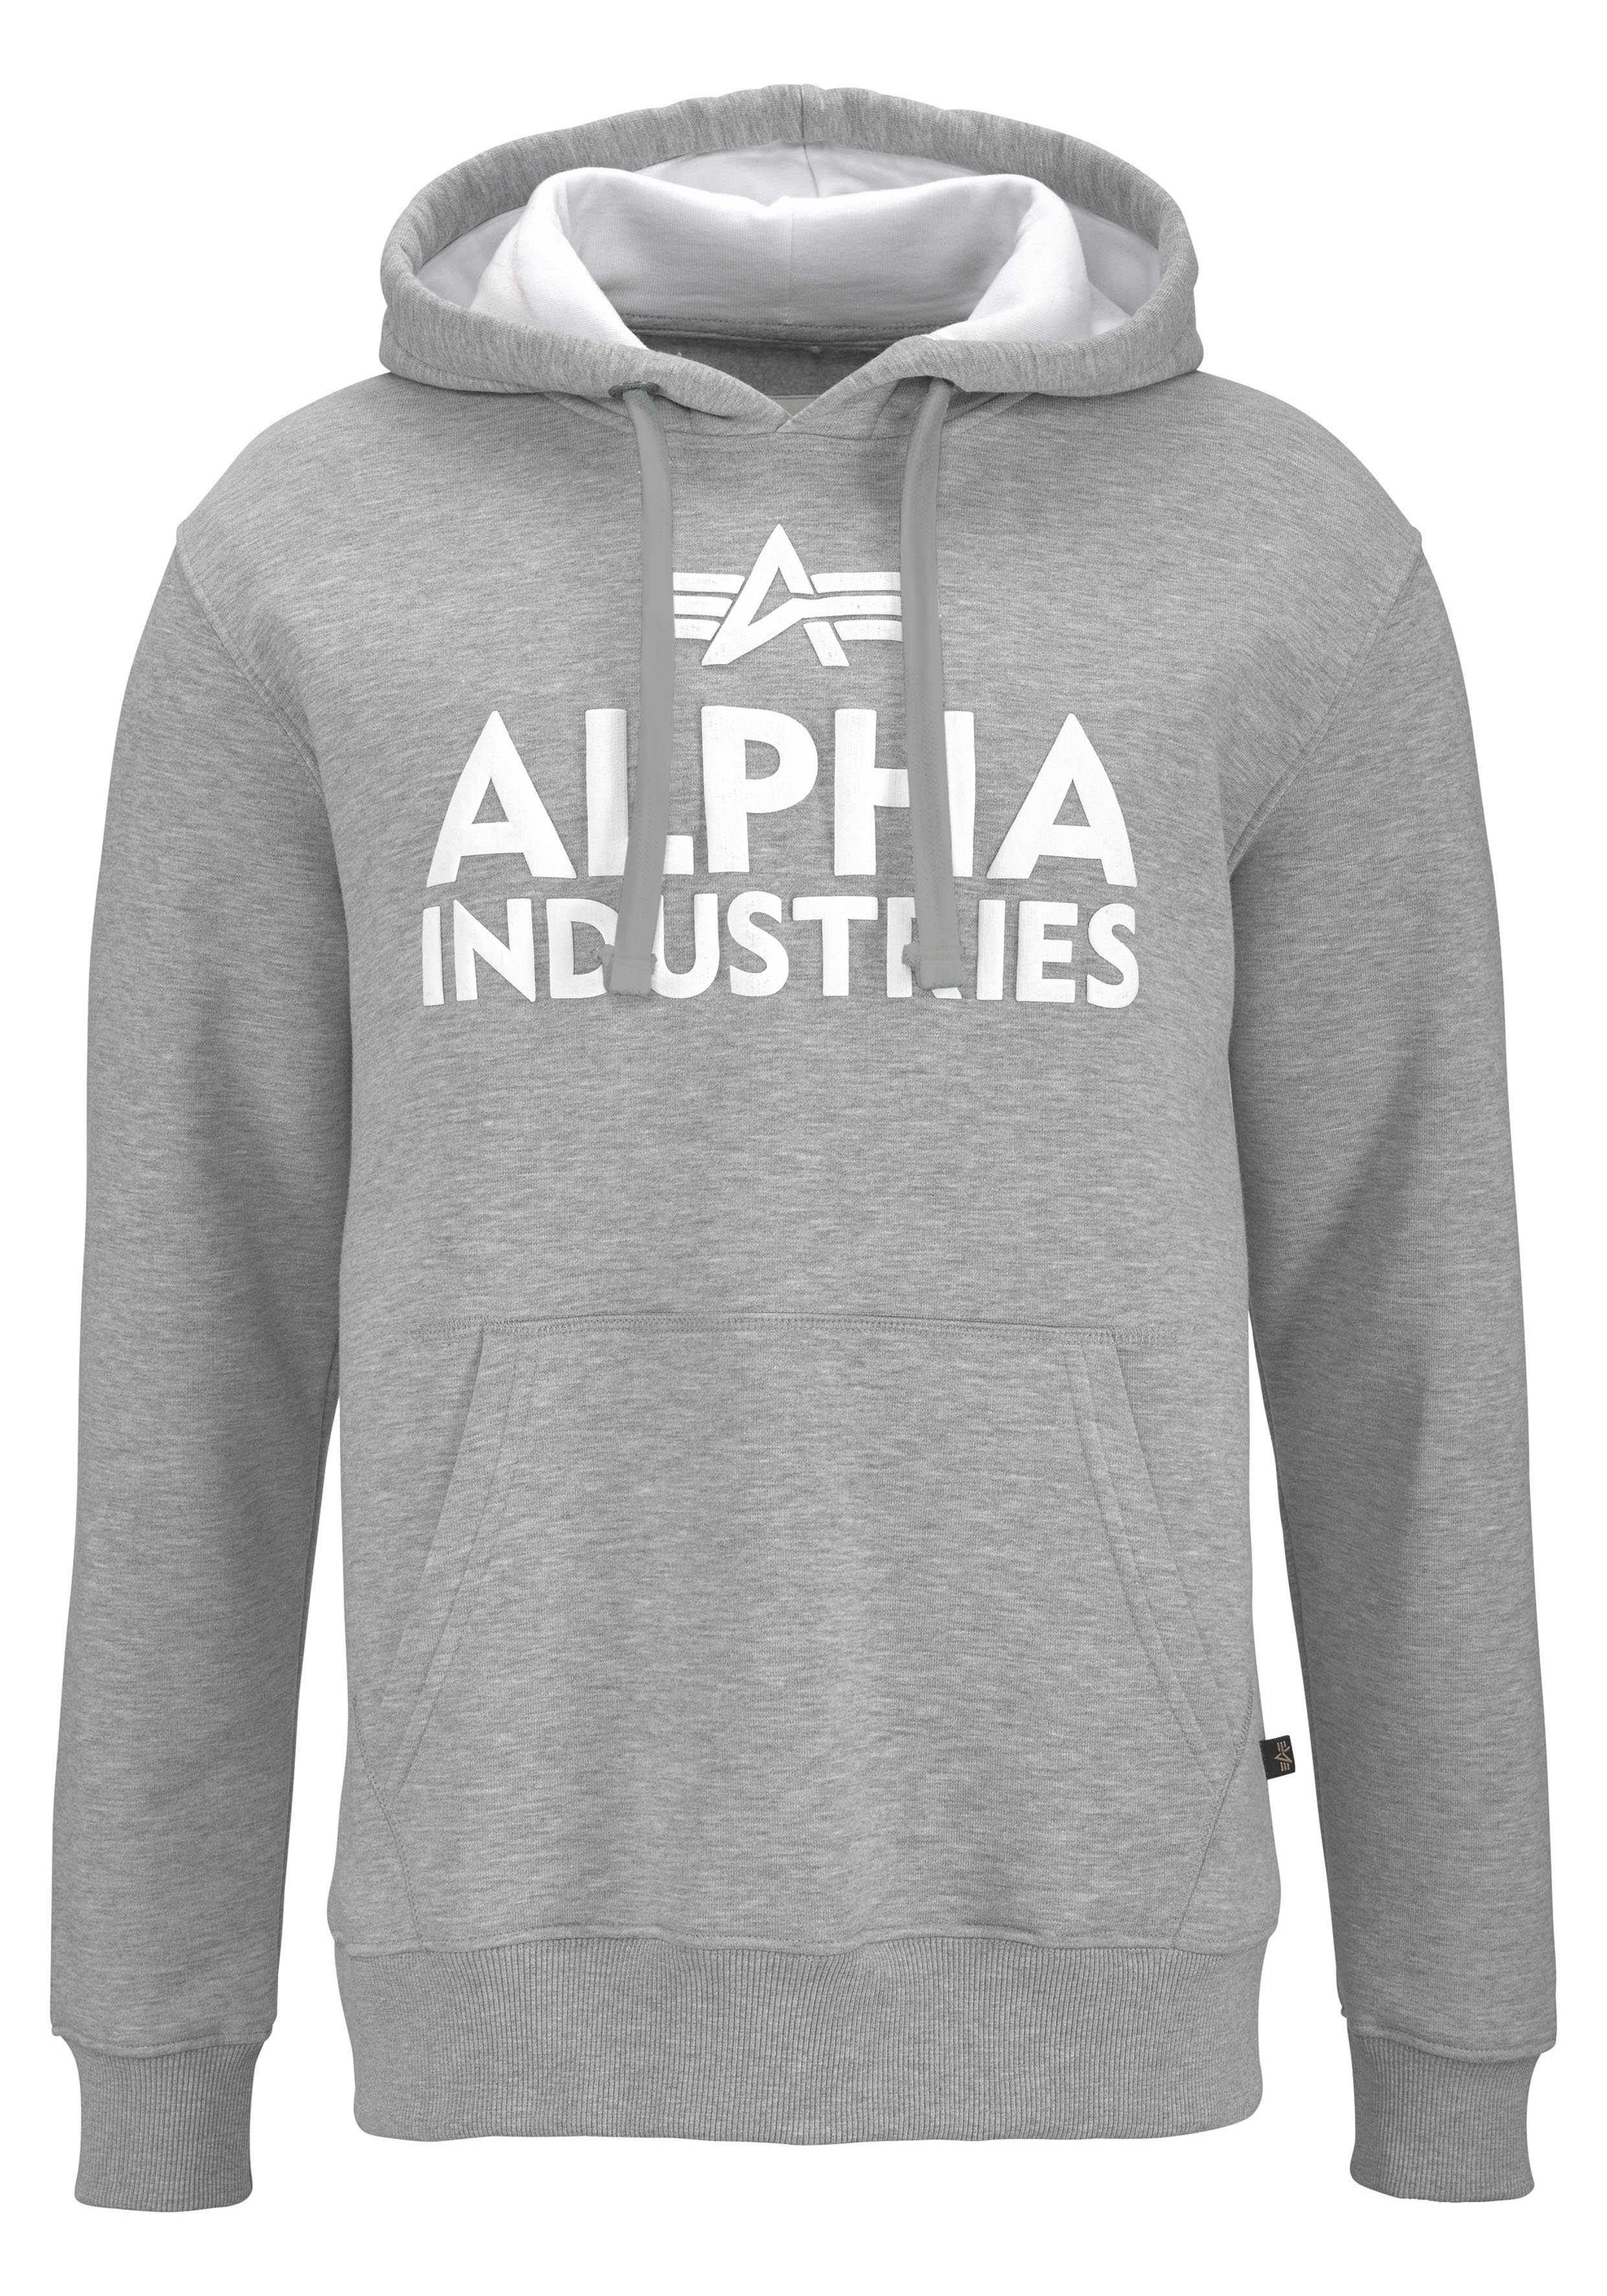 grau-meliert Kapuzensweatshirt Alpha Industries